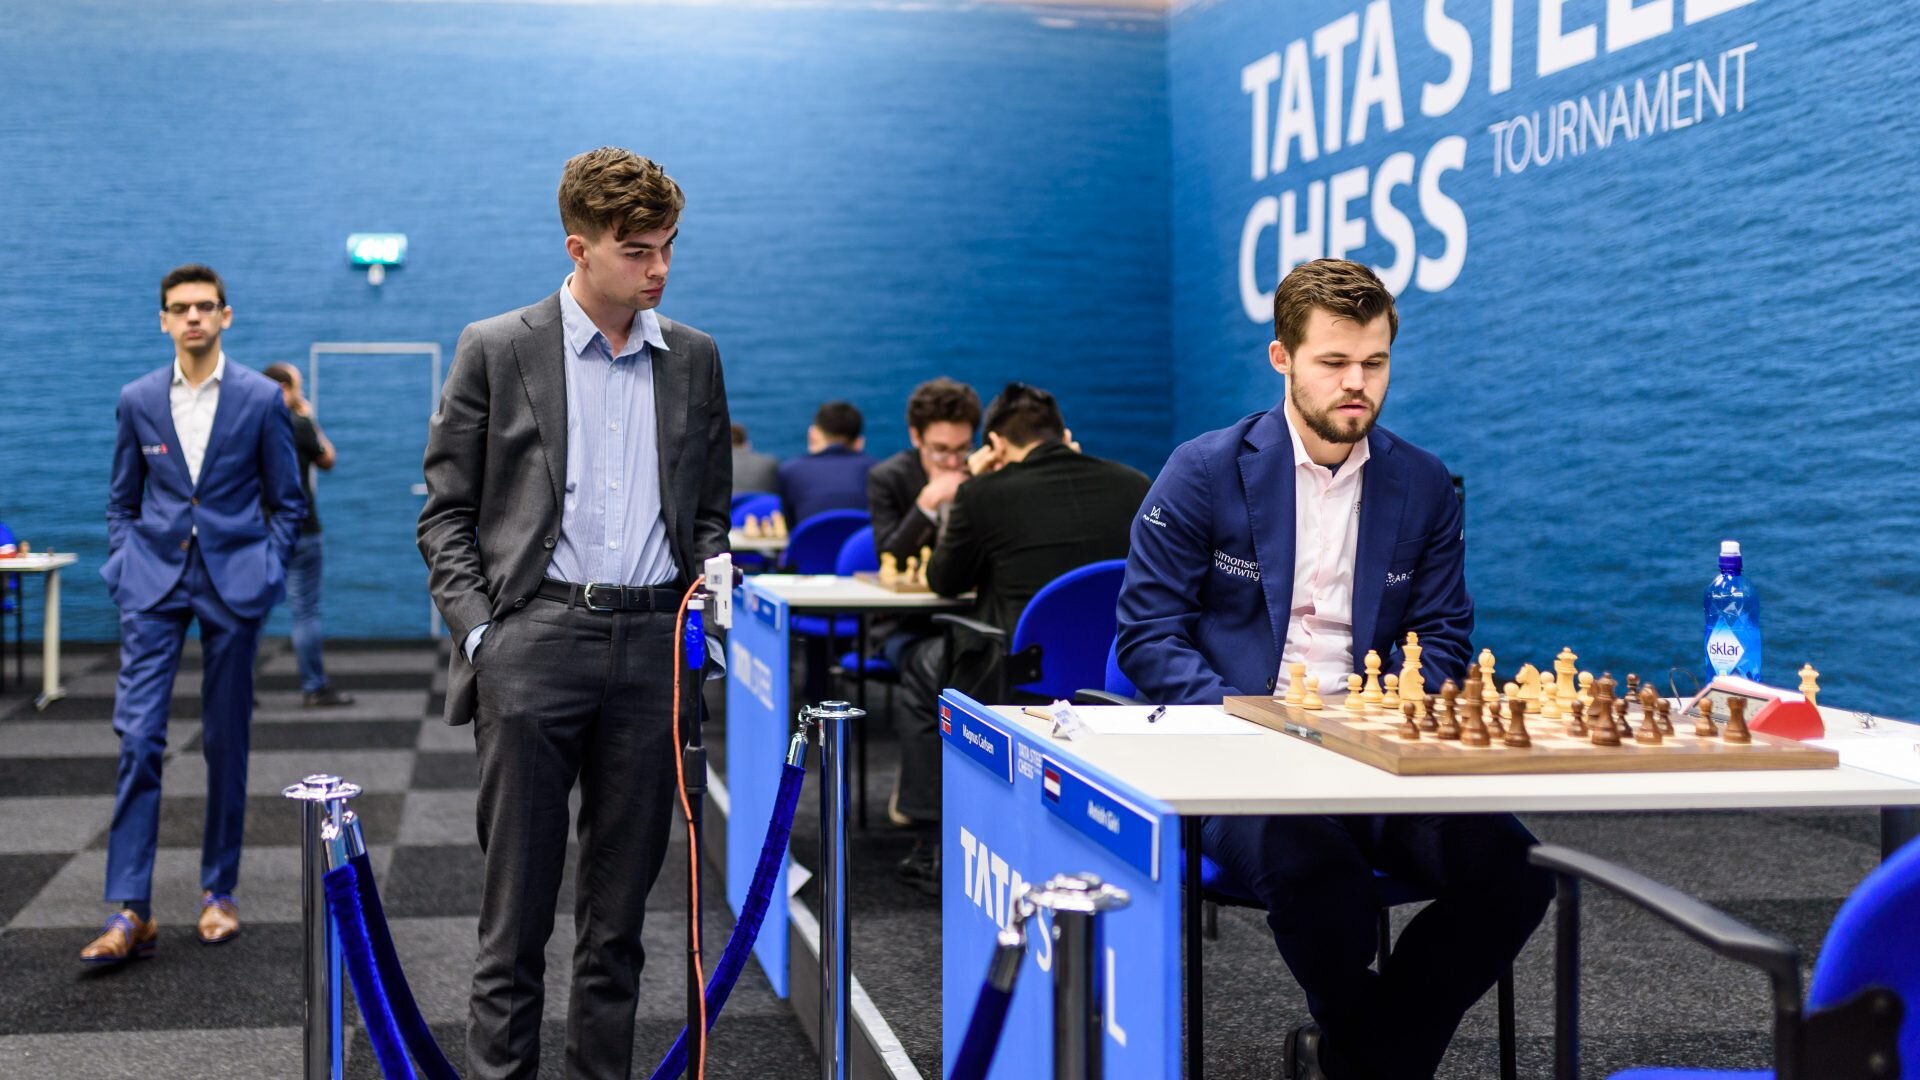 Tata Steel R1: Carlsen gambles, beats Firouzja